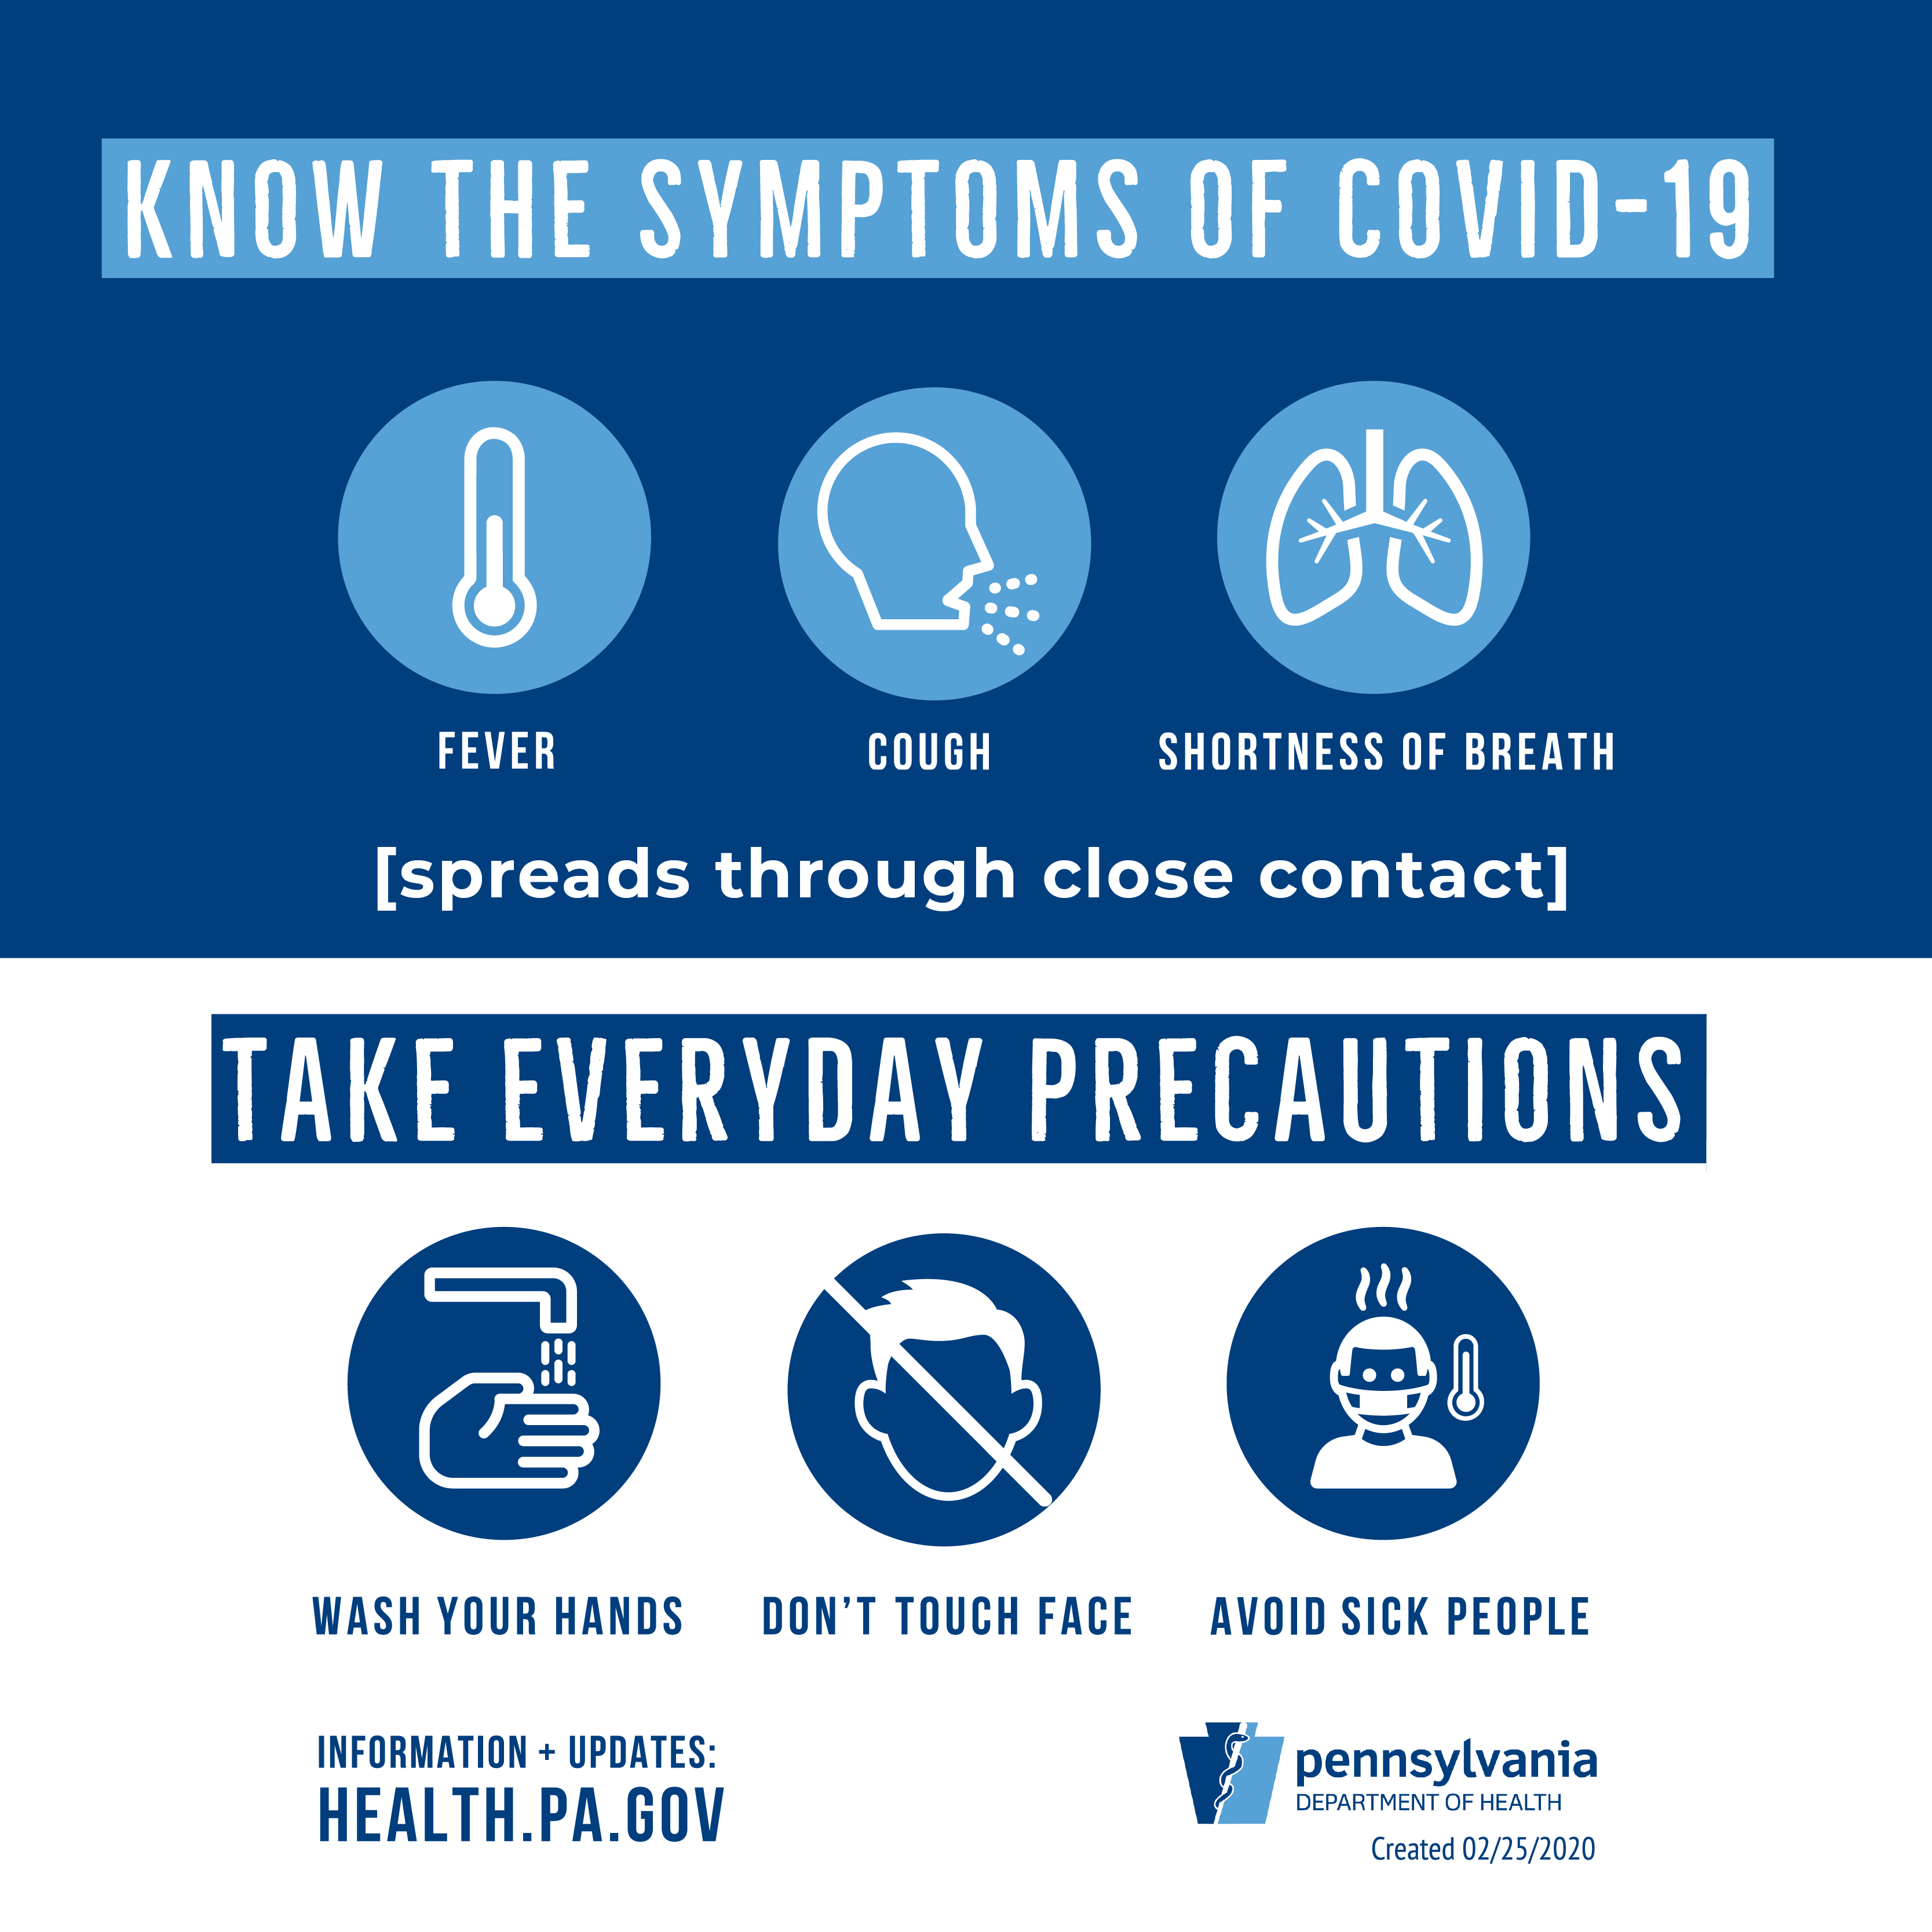 Coronavirus symptoms and precautions